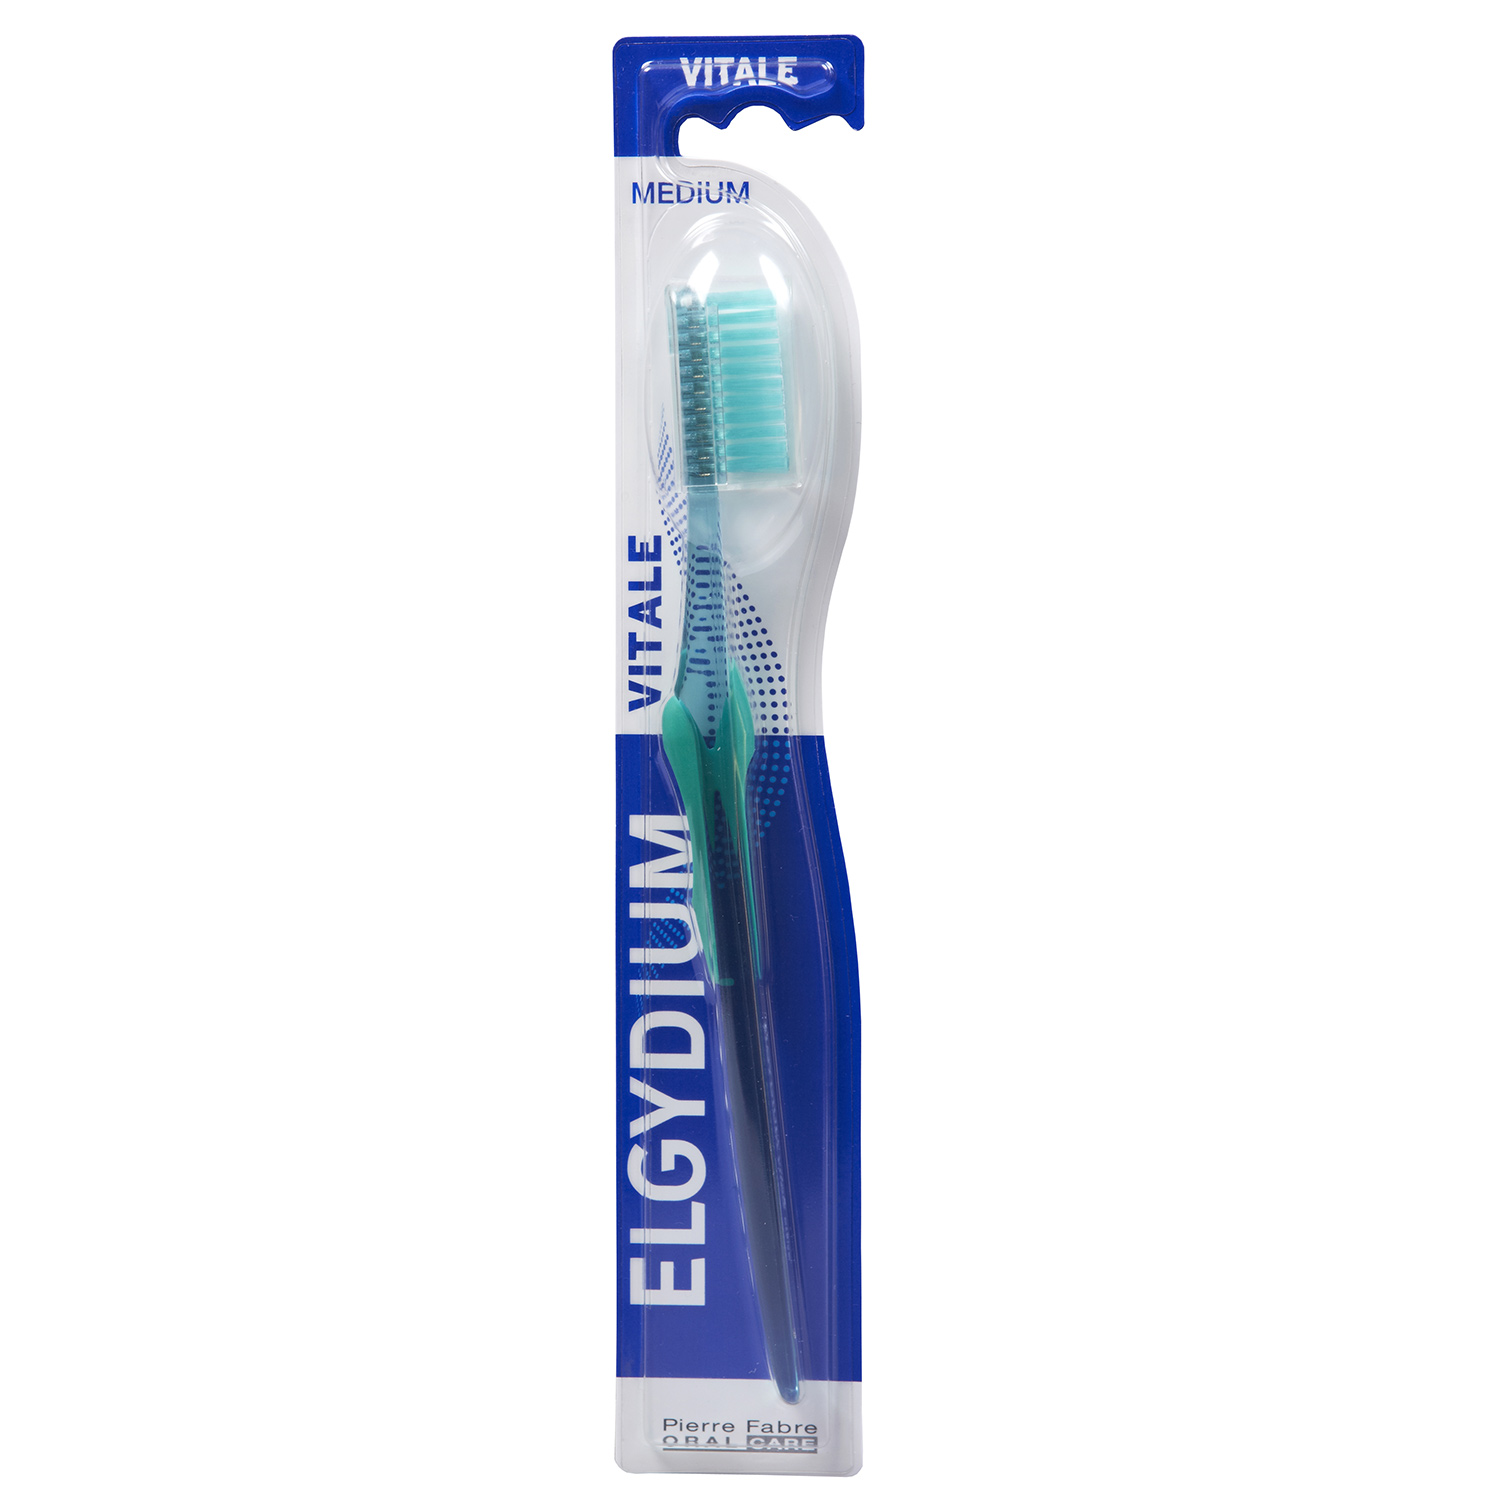 Product Image for Elgydium Vitale Toothbrush Medium